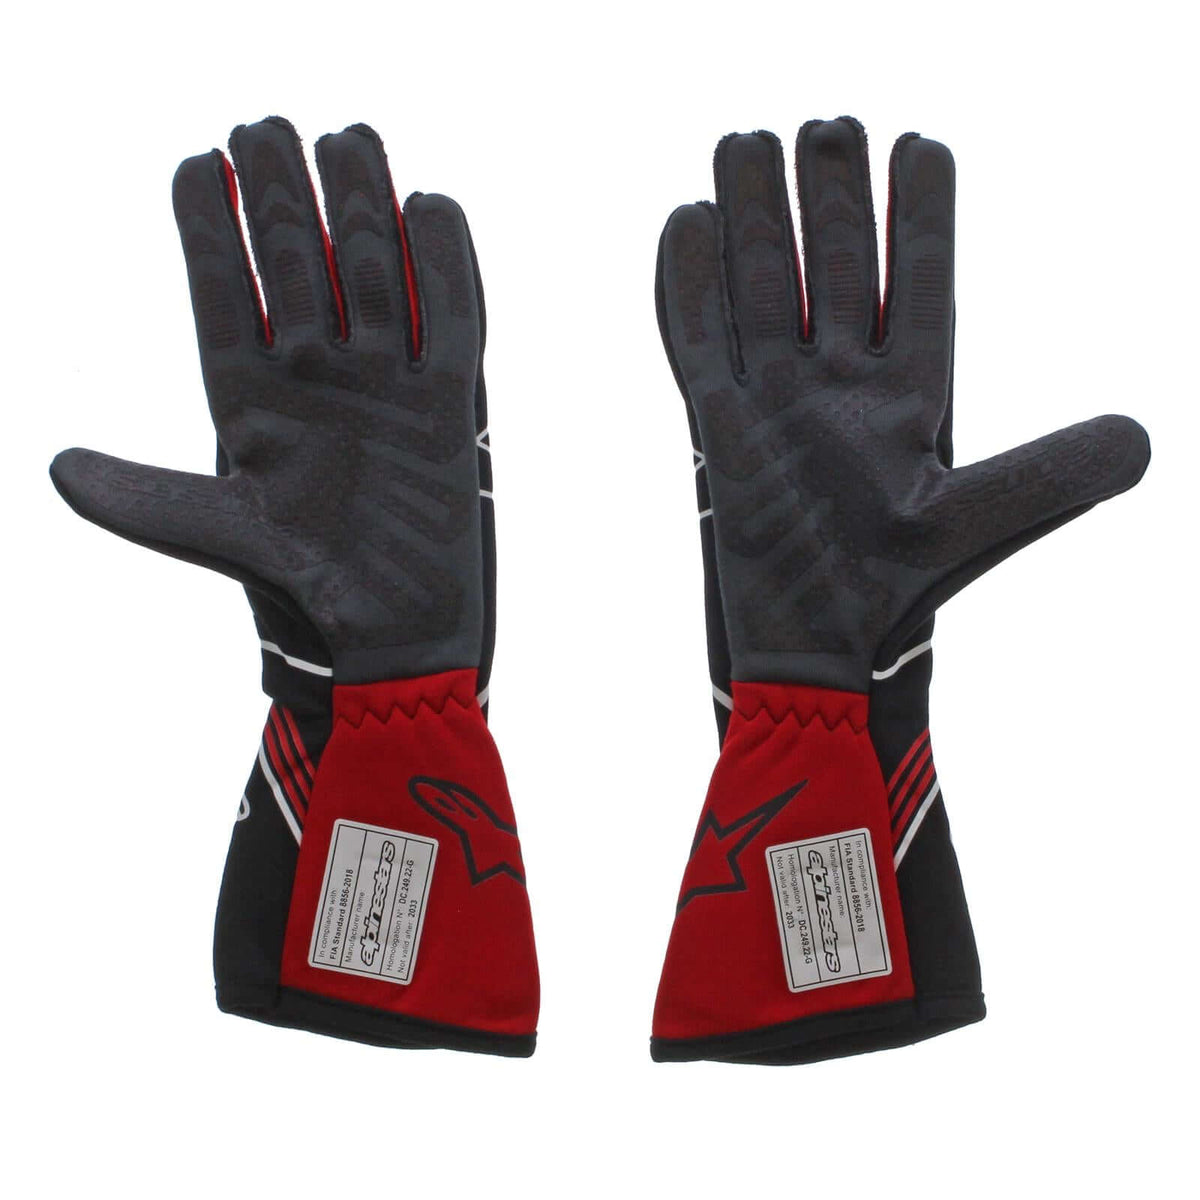 Tech-1 Race V3 Gloves - $159.95